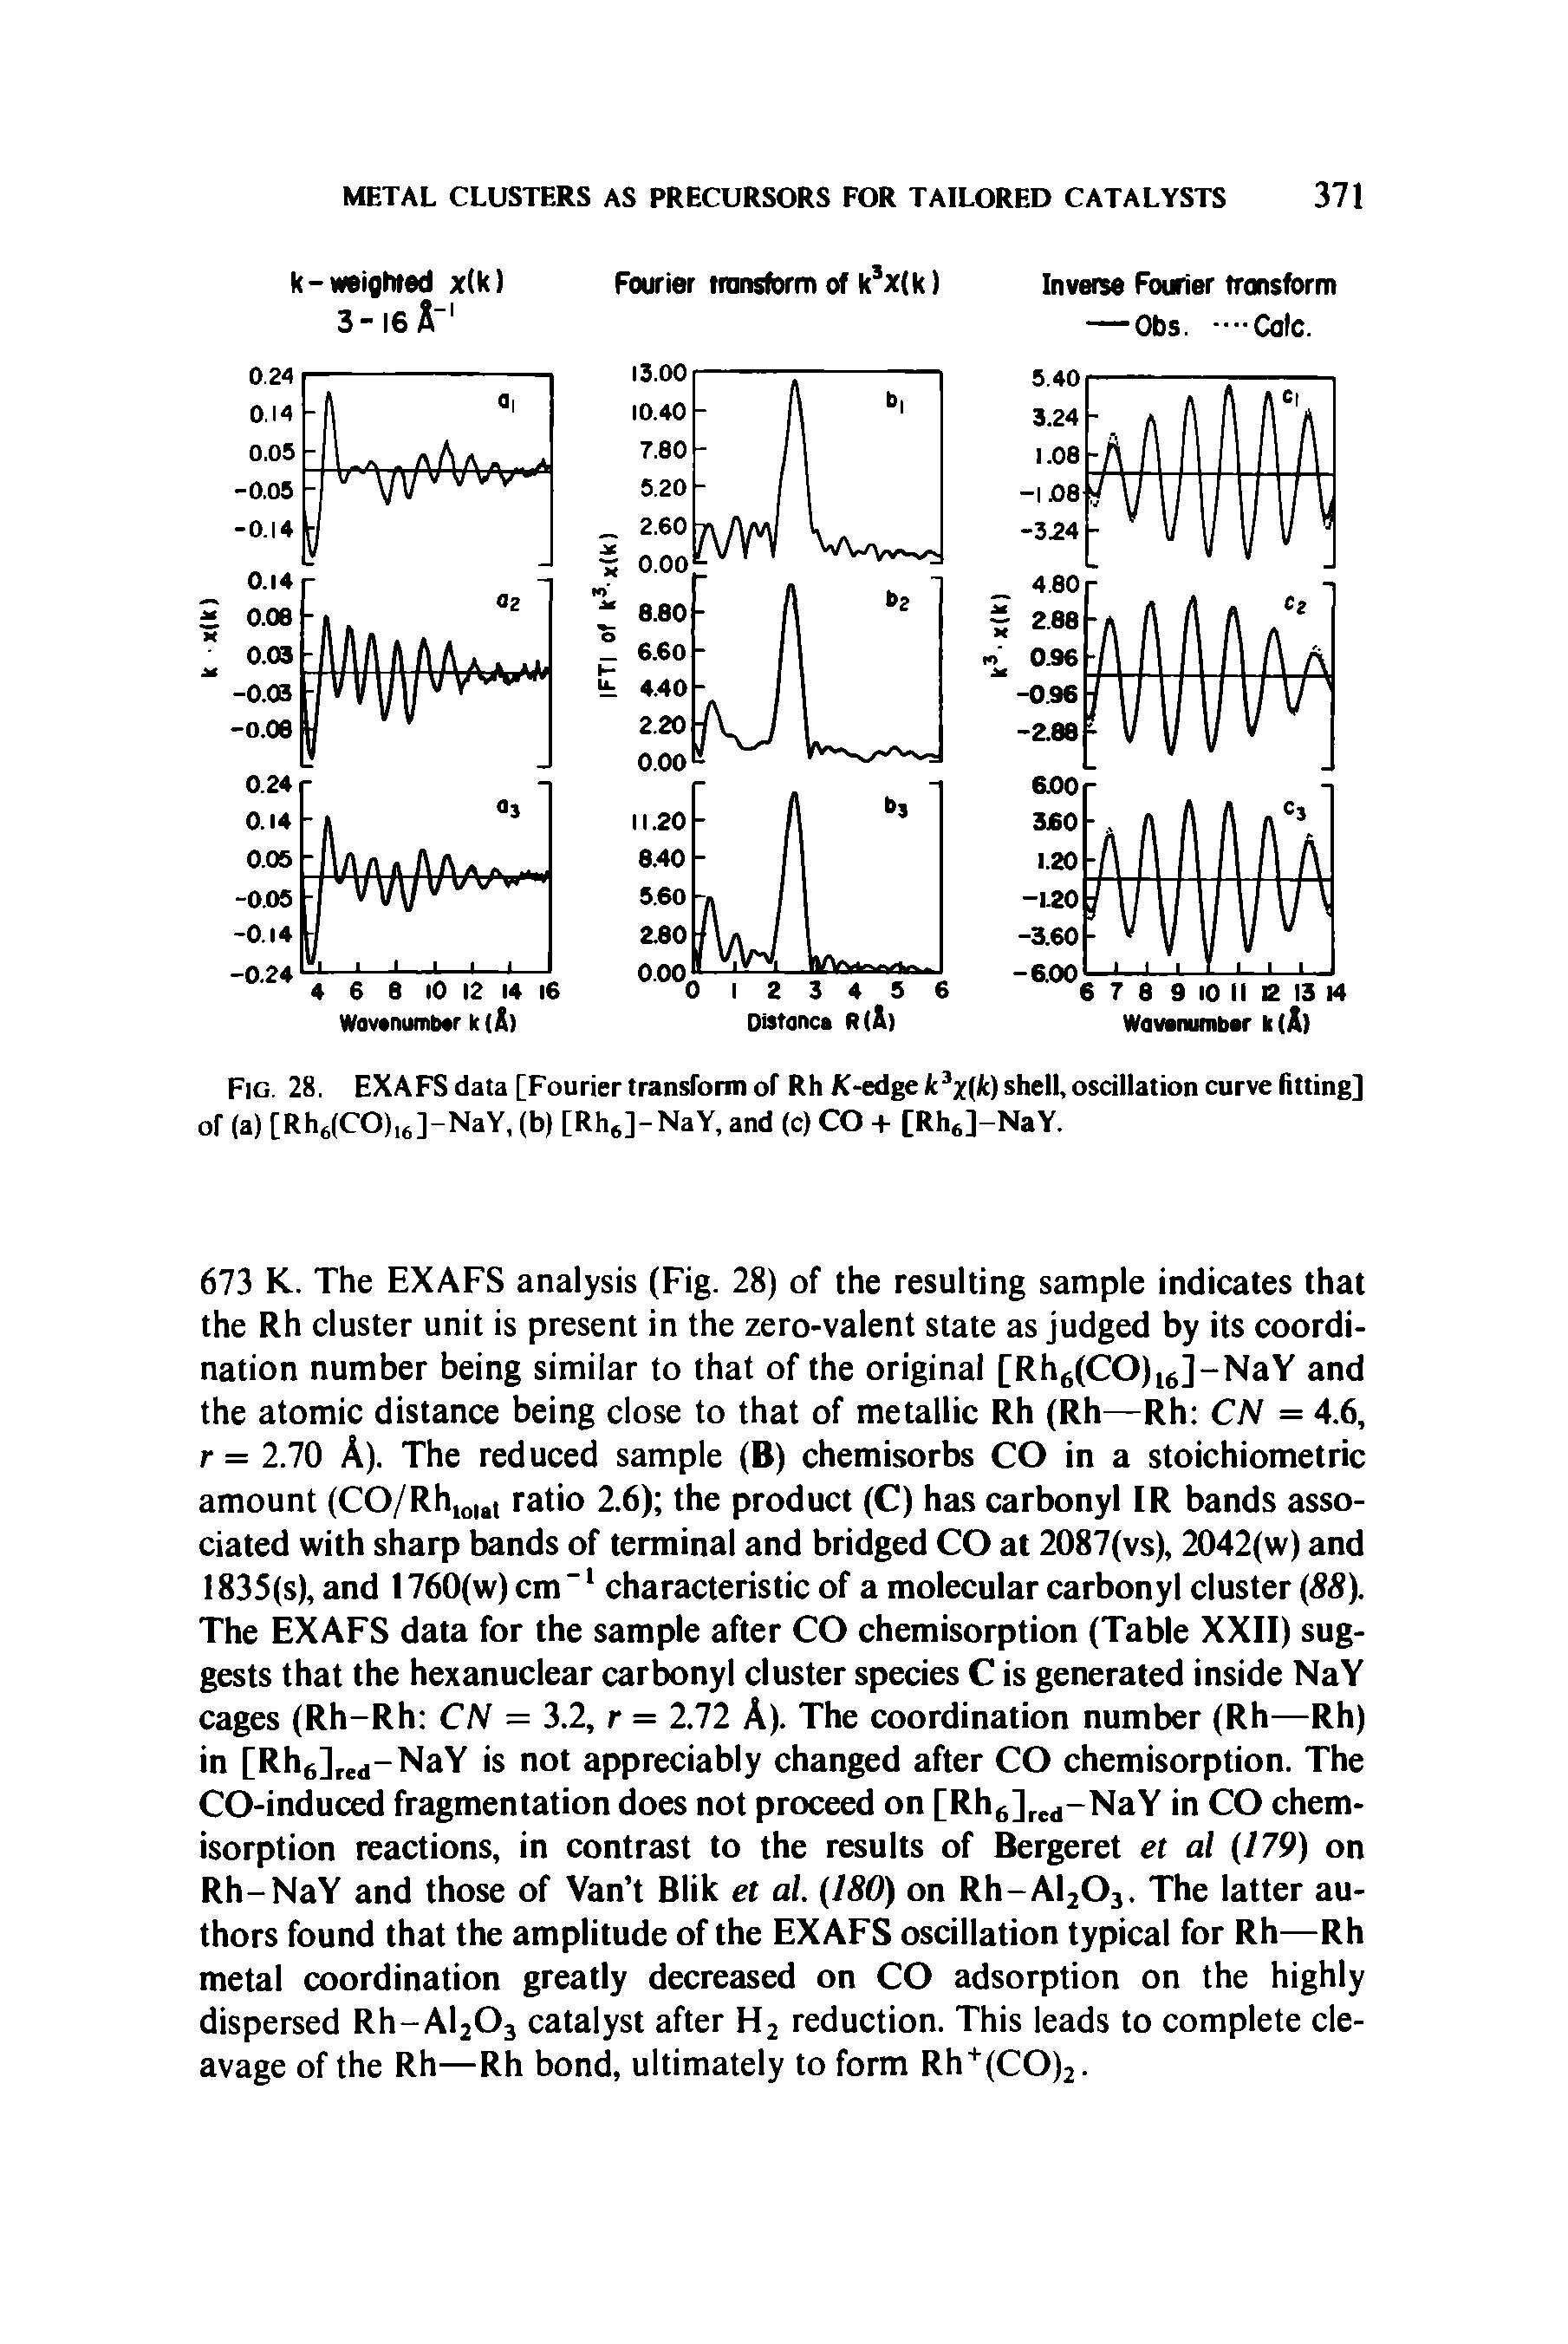 Fig. 28. EXAFS data [Fourier transform of Rh K-edge k x k) shell, oscillation curve fitting] of (a) [RhjeO),J-NaY, (b) [Rhjj-NaY, and (c) CO + [RhJ-NaY.